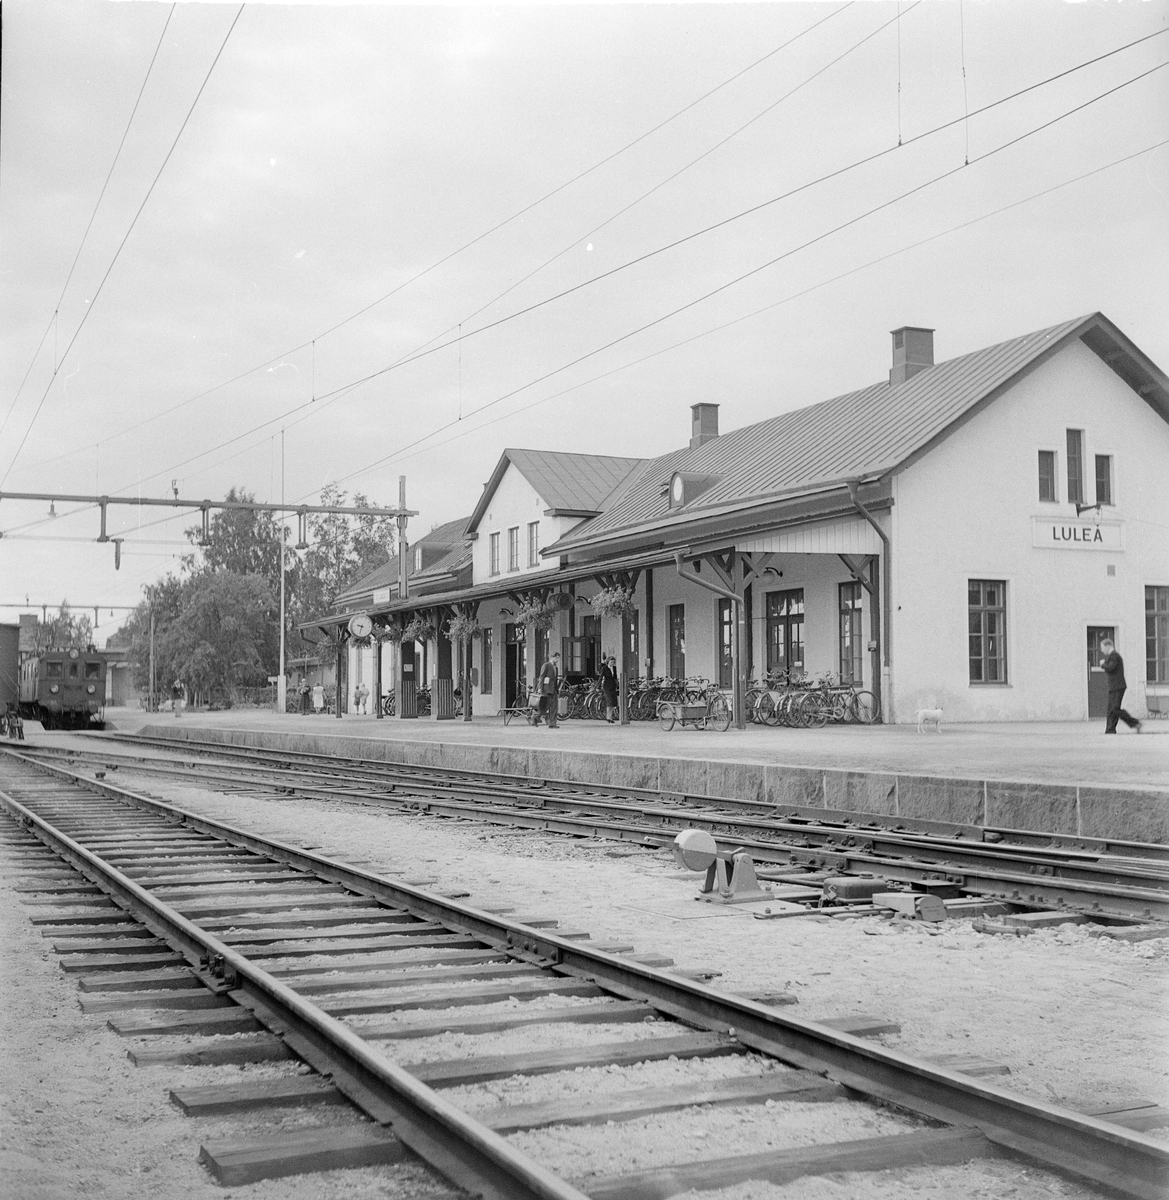 D-lok inne på Luleå järnvägsstation.